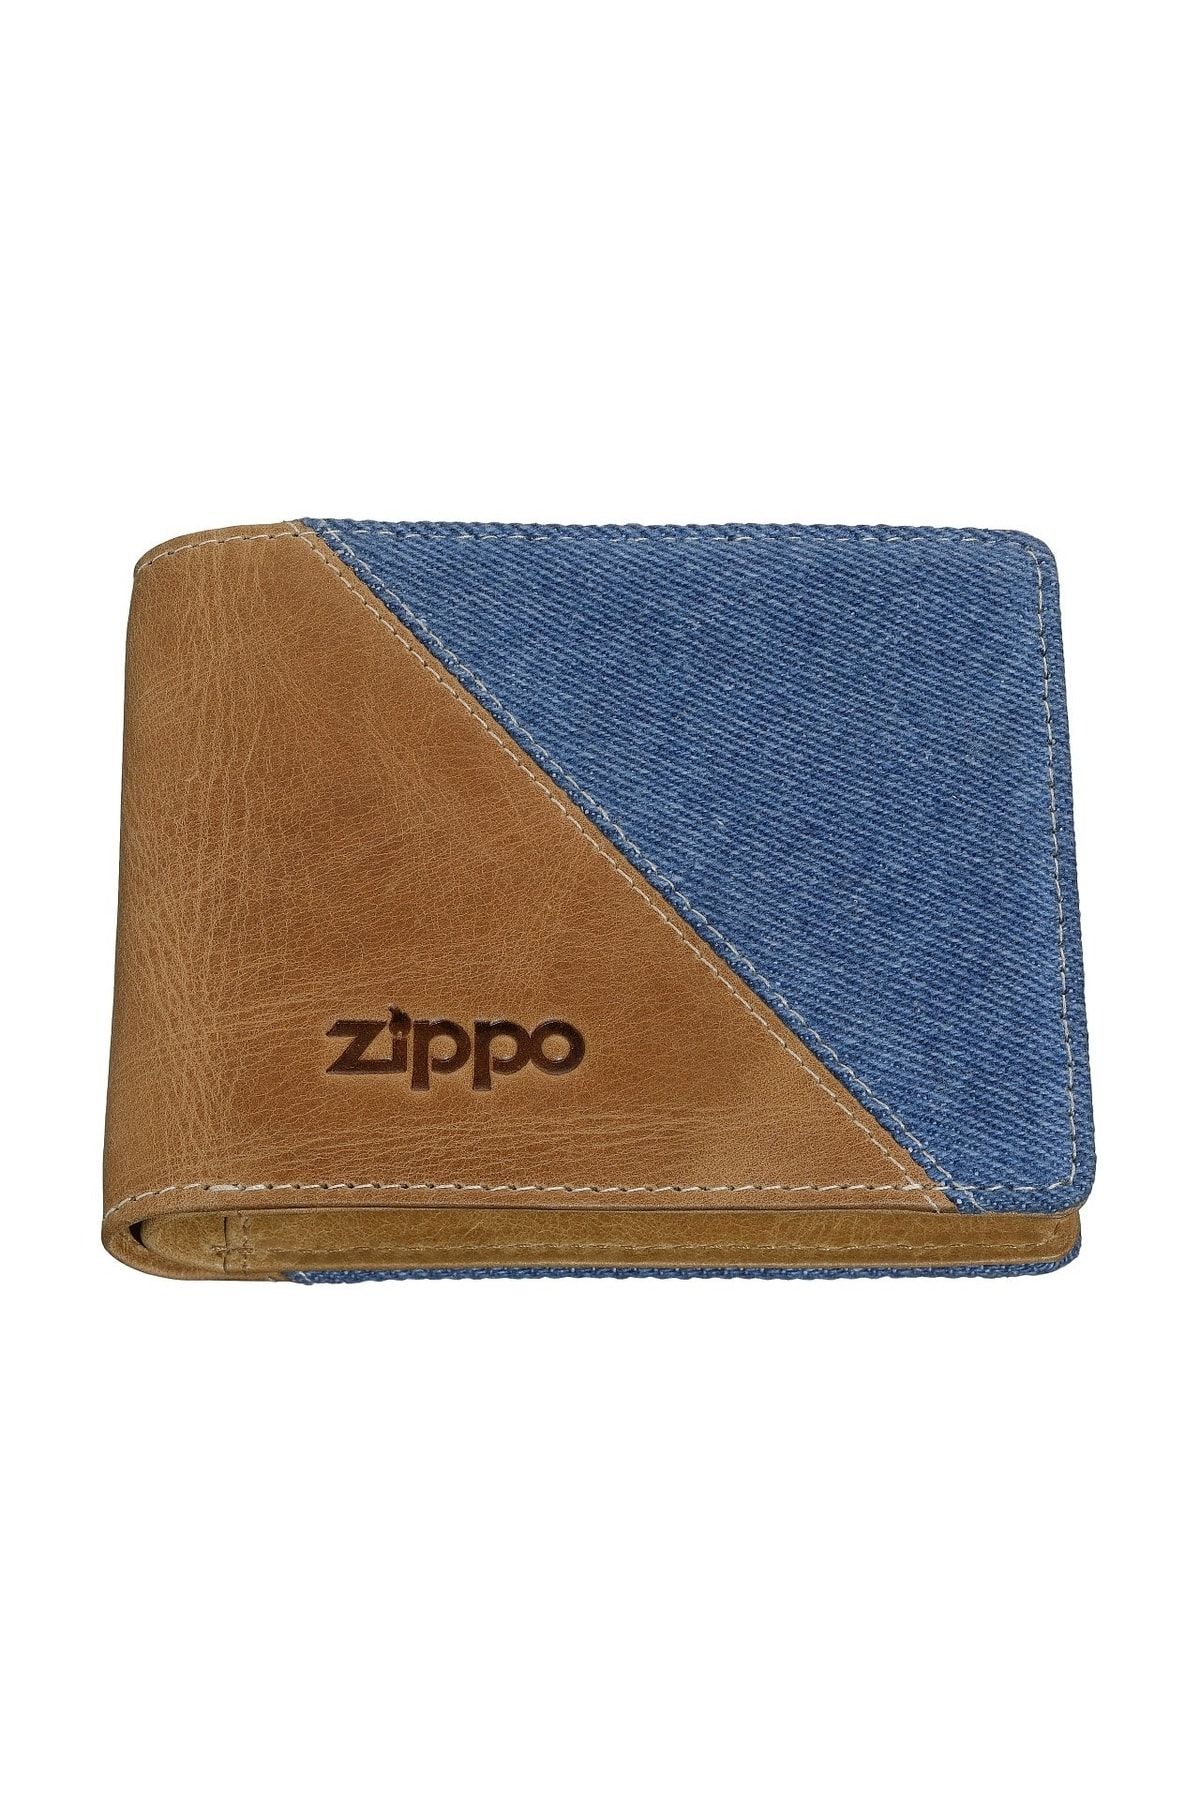 Zippo Cüzdan Mens Wallet Denim Blue Tan 2007138